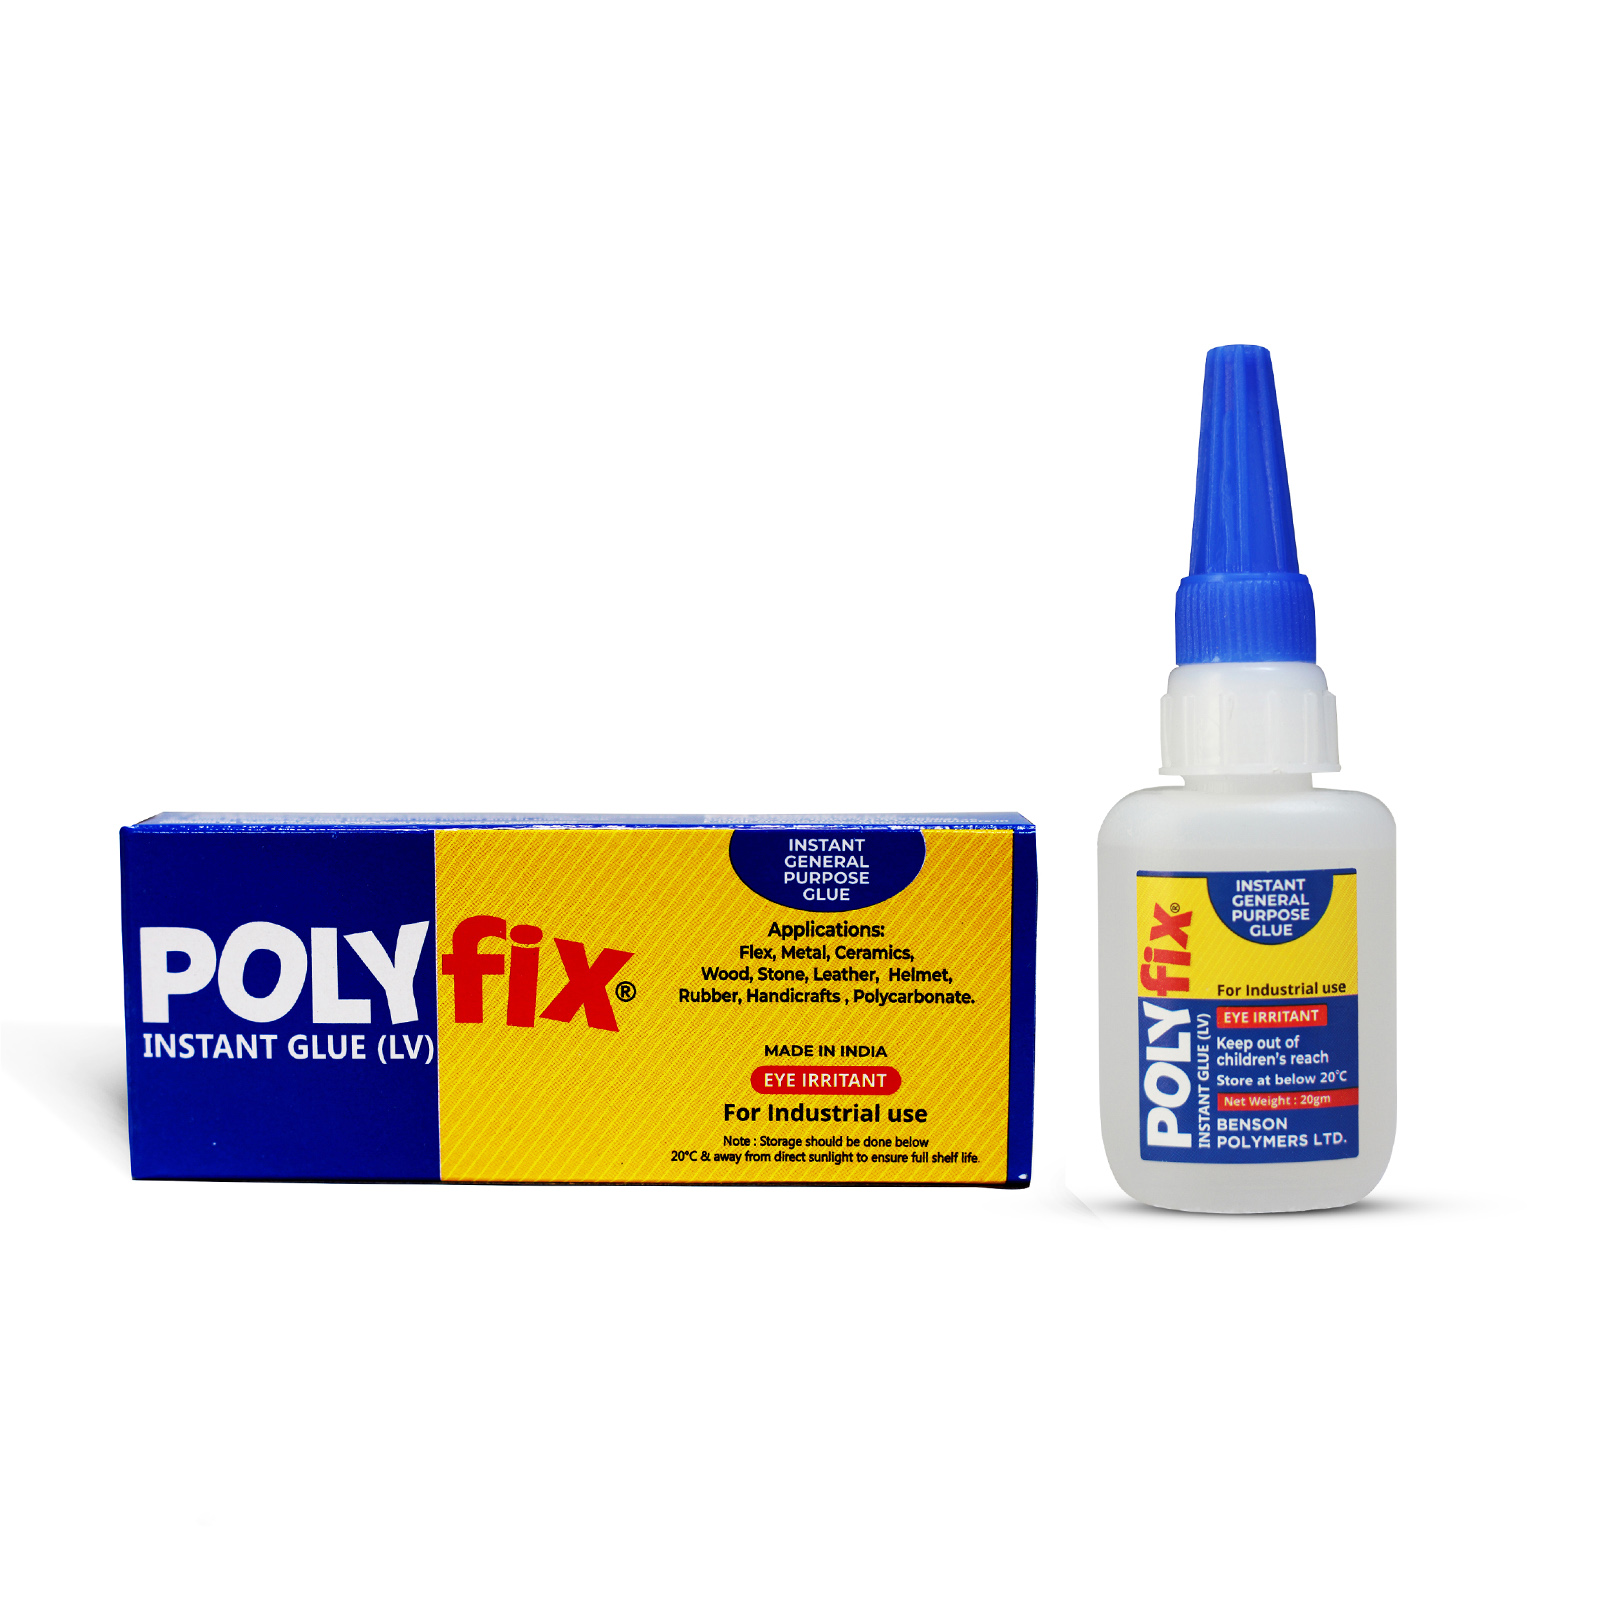 Cyanoacrylate glue